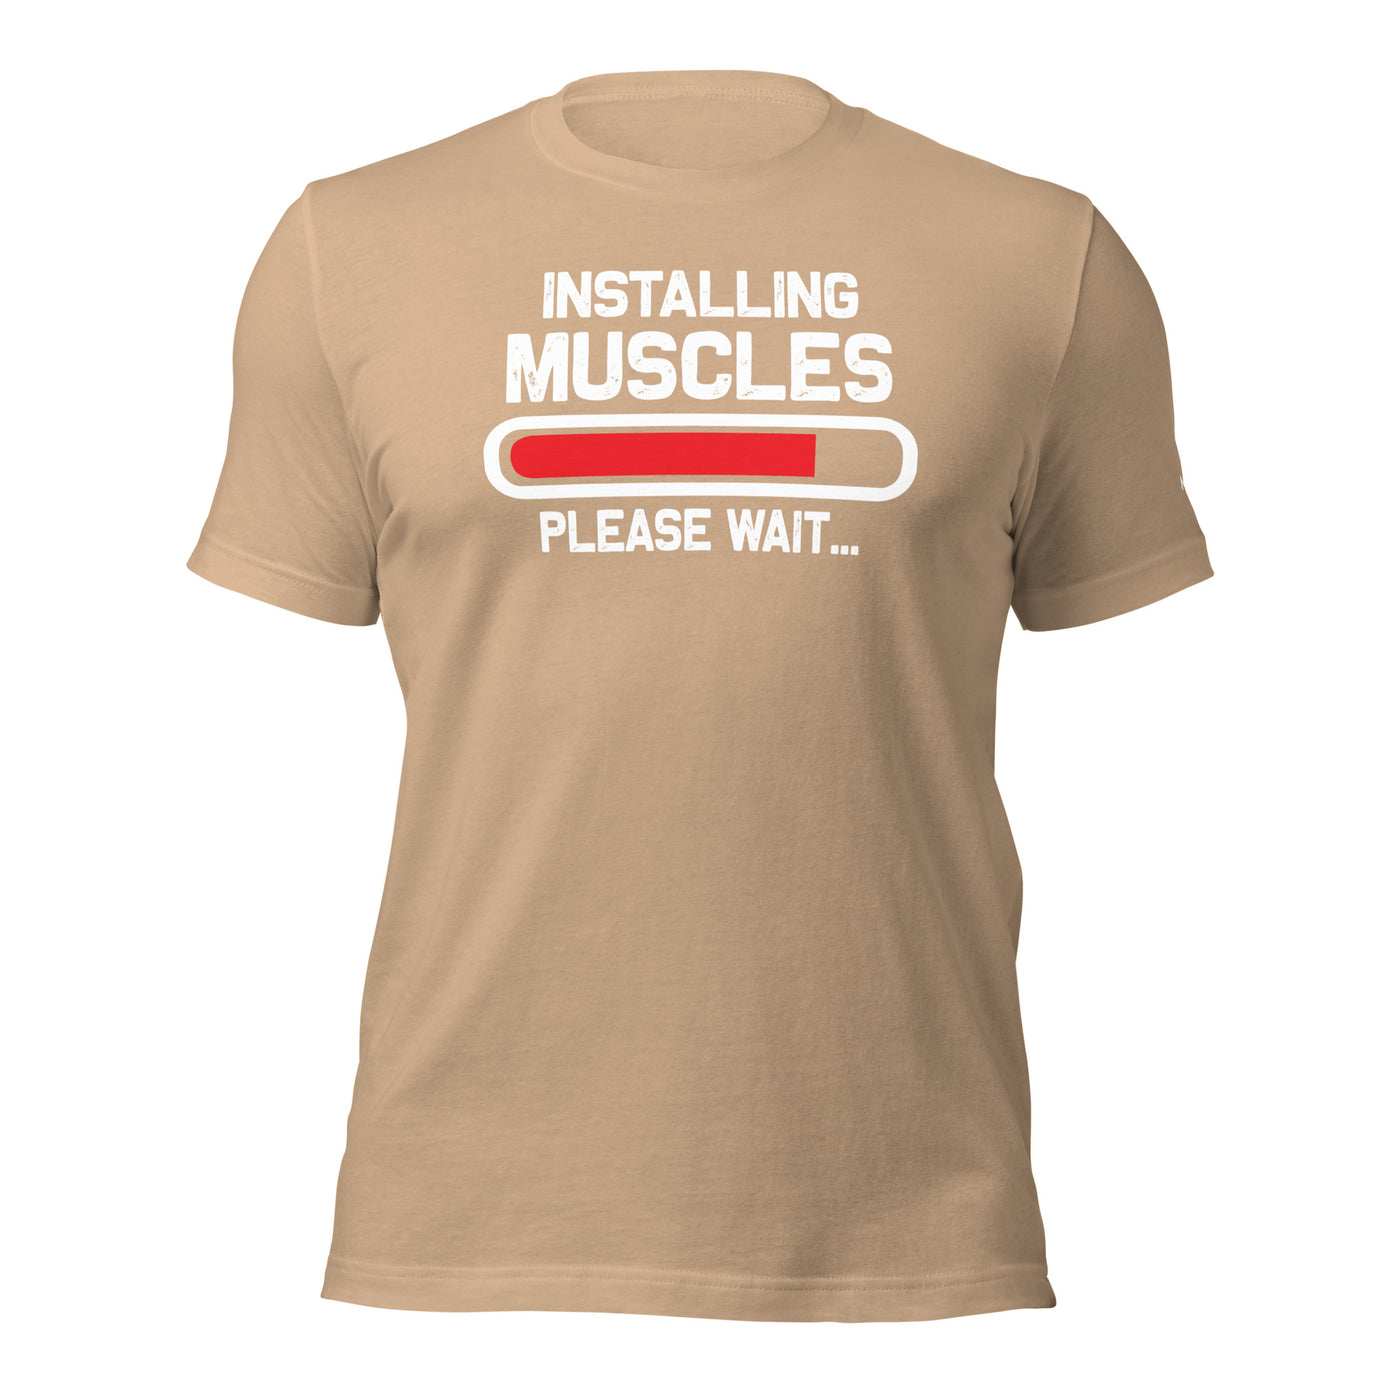 Installing muscles please wait - Unisex t-shirt